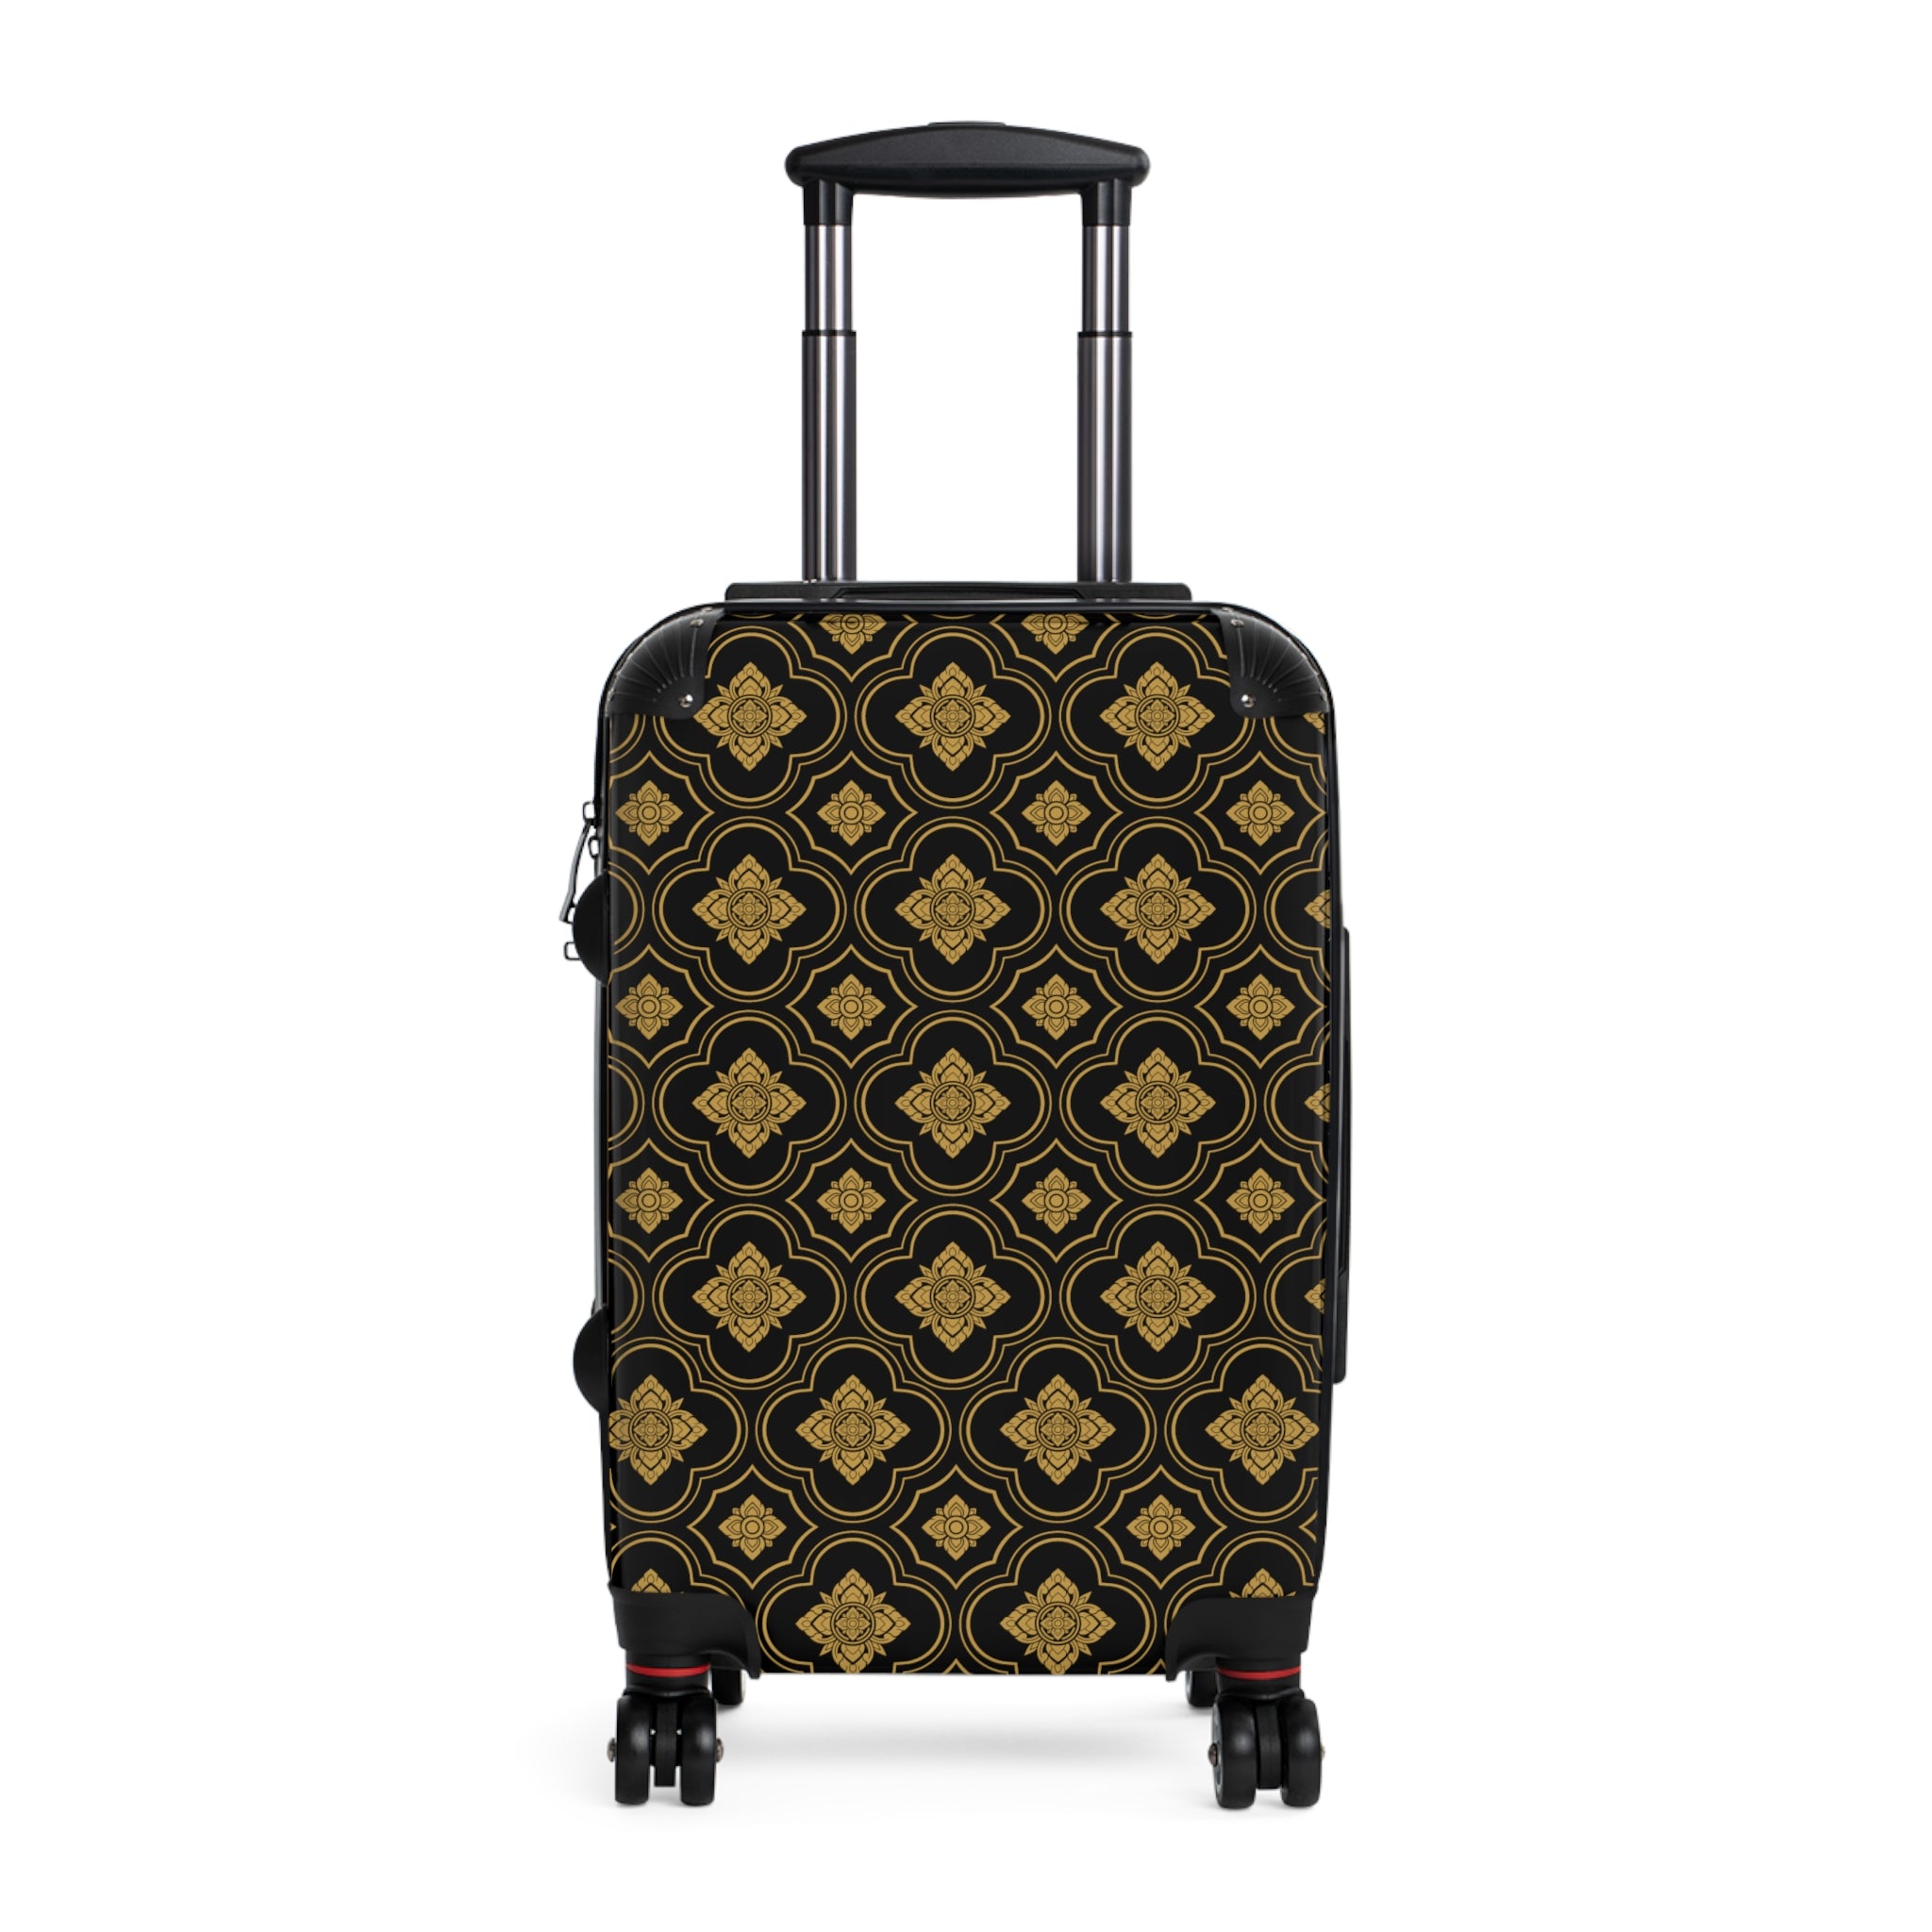 Golden Suitcase